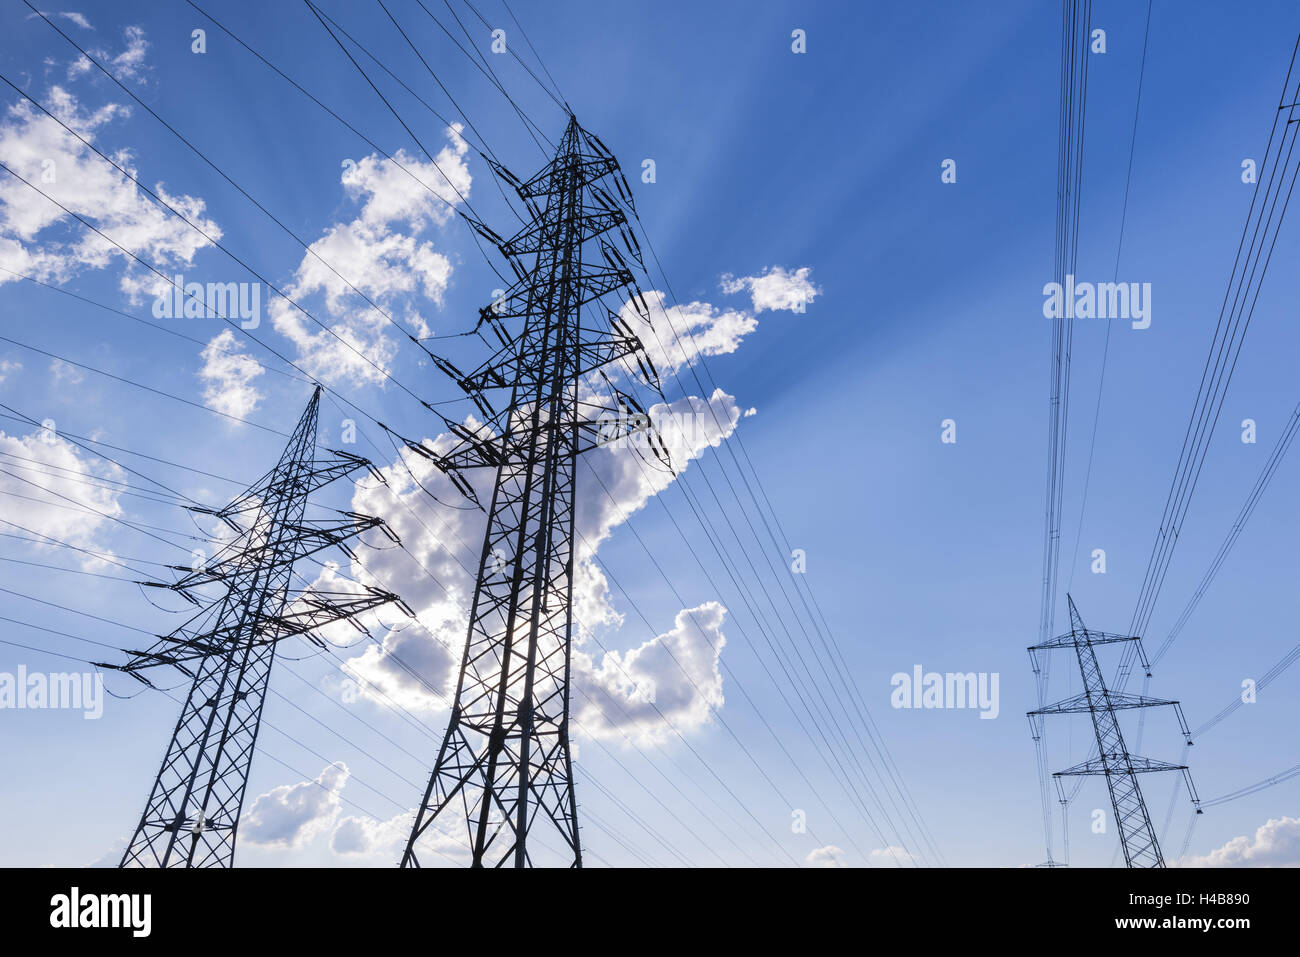 Germany, Hessen, Taunus (region), Niedernhausen, electricity pylons and power lines, Stock Photo